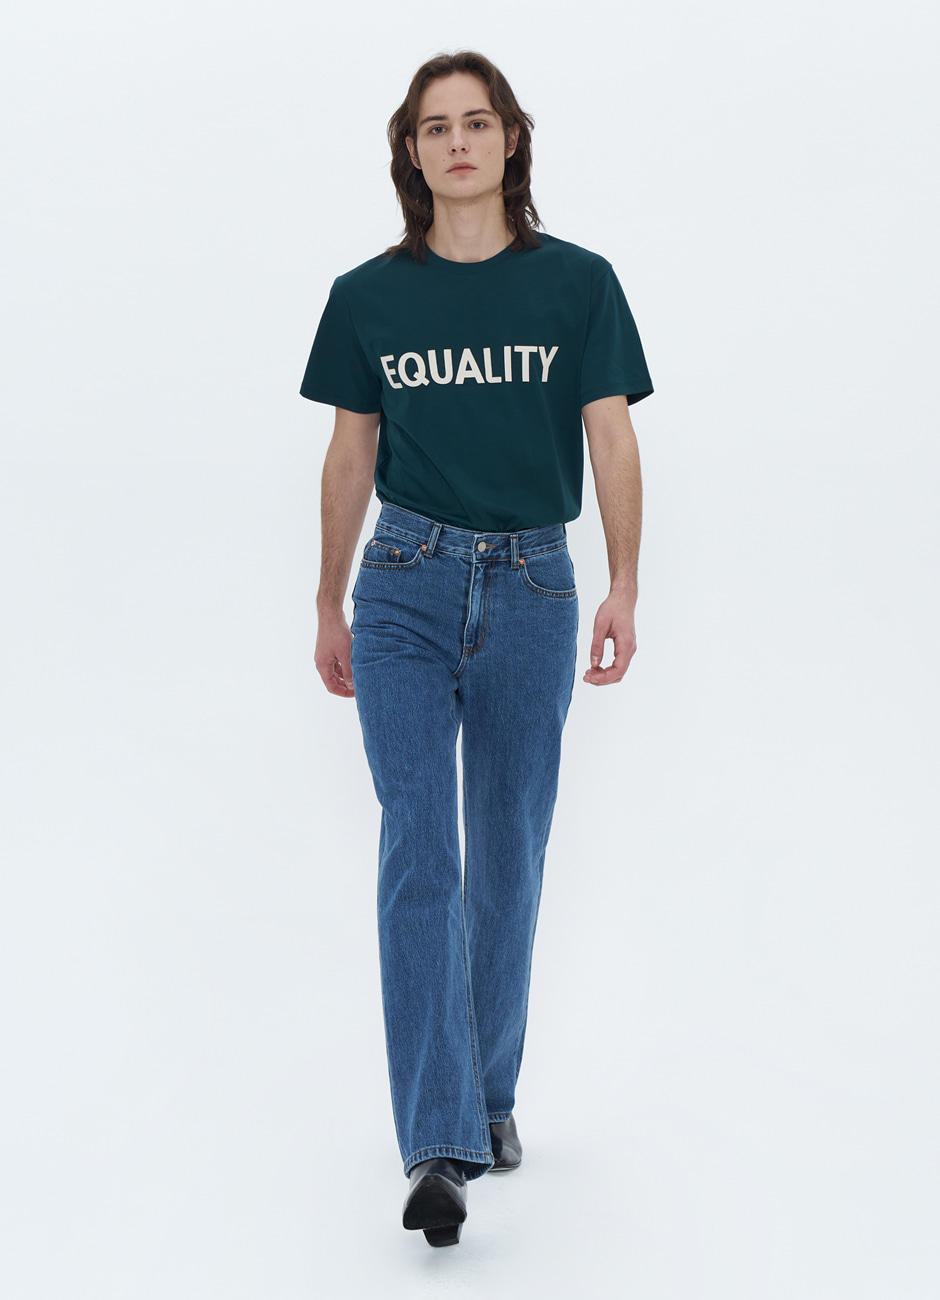 Equality T-shirt_Blue Green